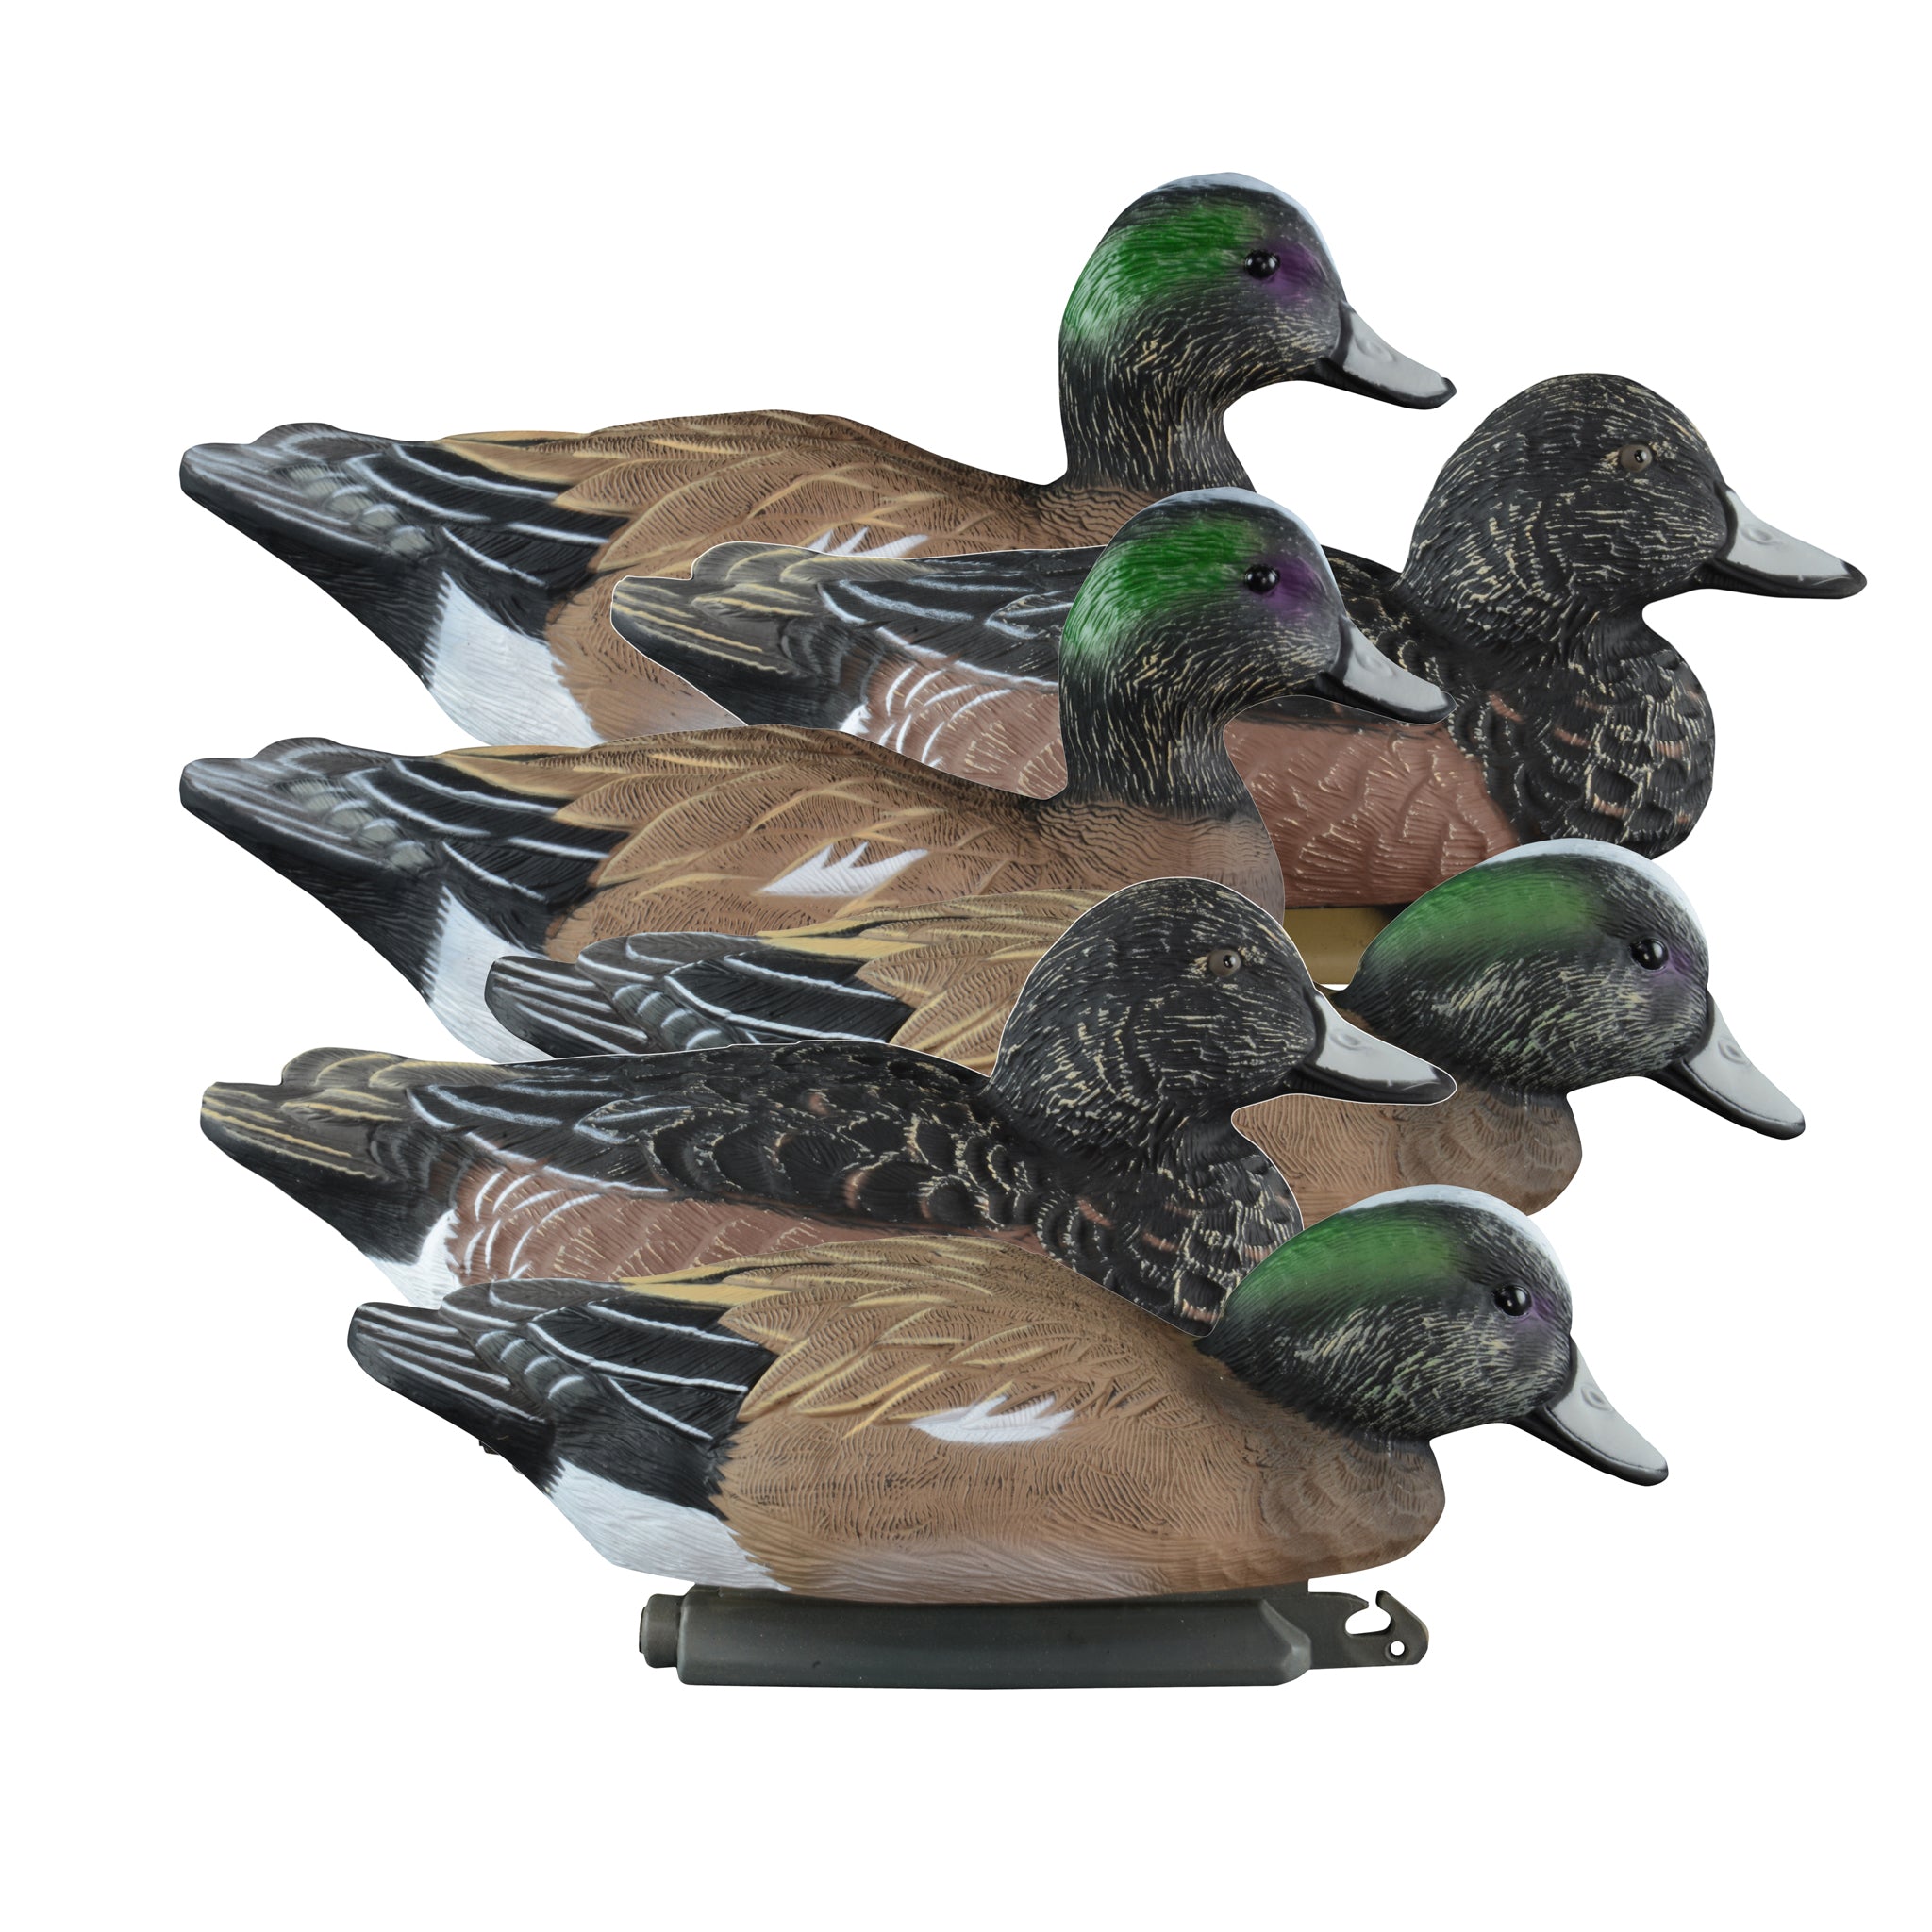 Ducks Unlimited Wigeon 5mm 1600g Waders (11)- RTMX-5